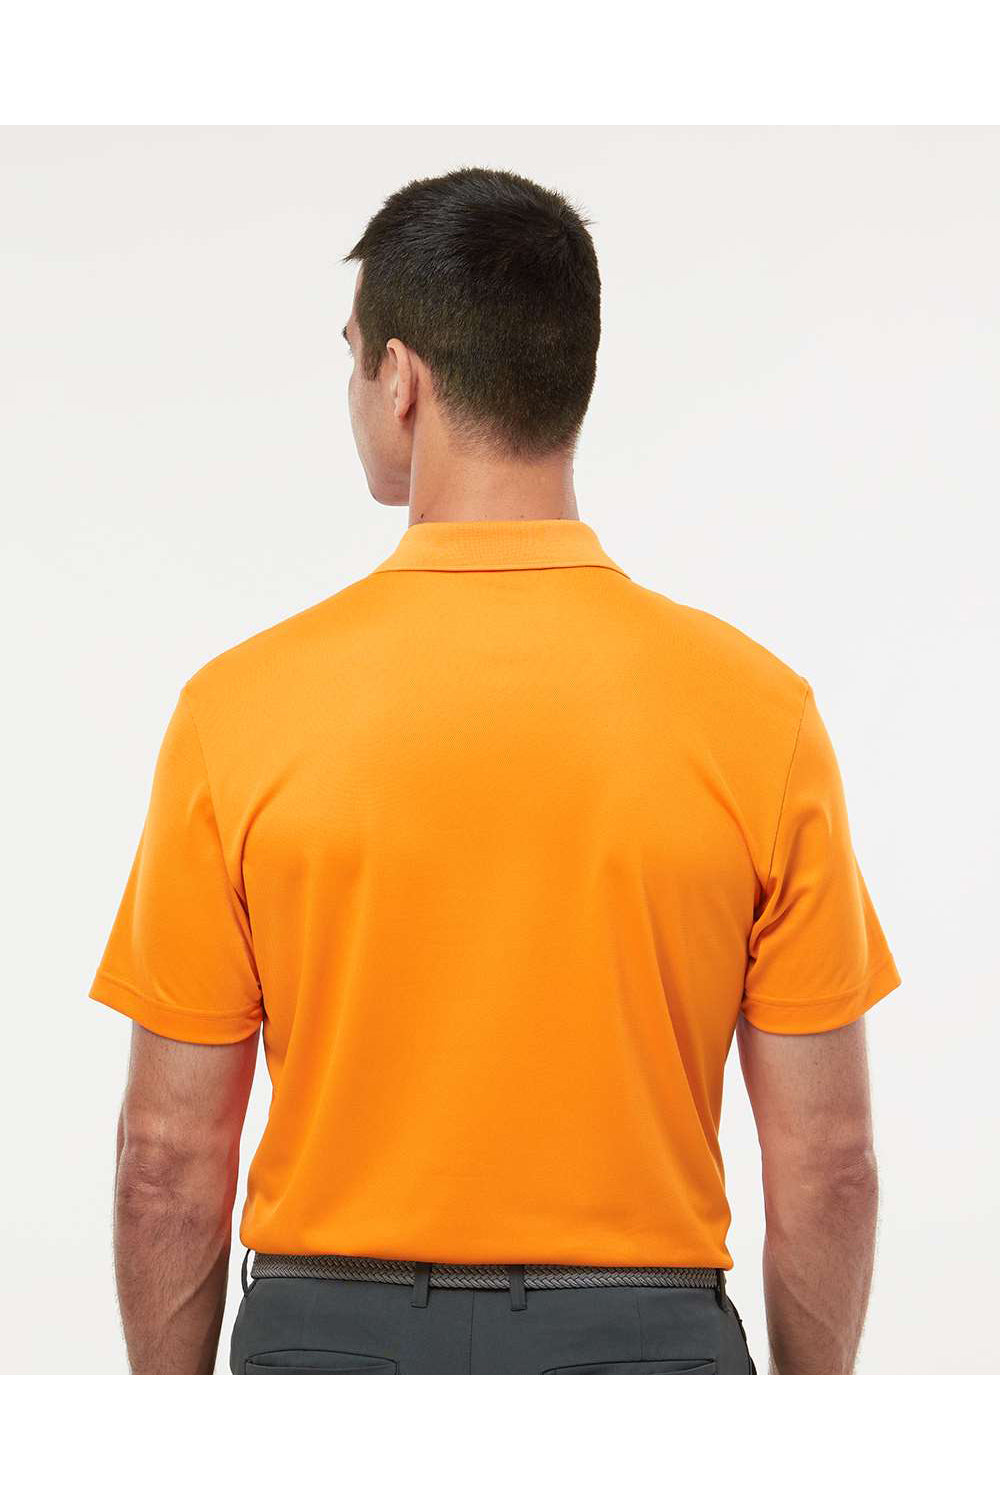 Adidas A430 Mens Basic Short Sleeve Polo Shirt Bright Orange Model Back